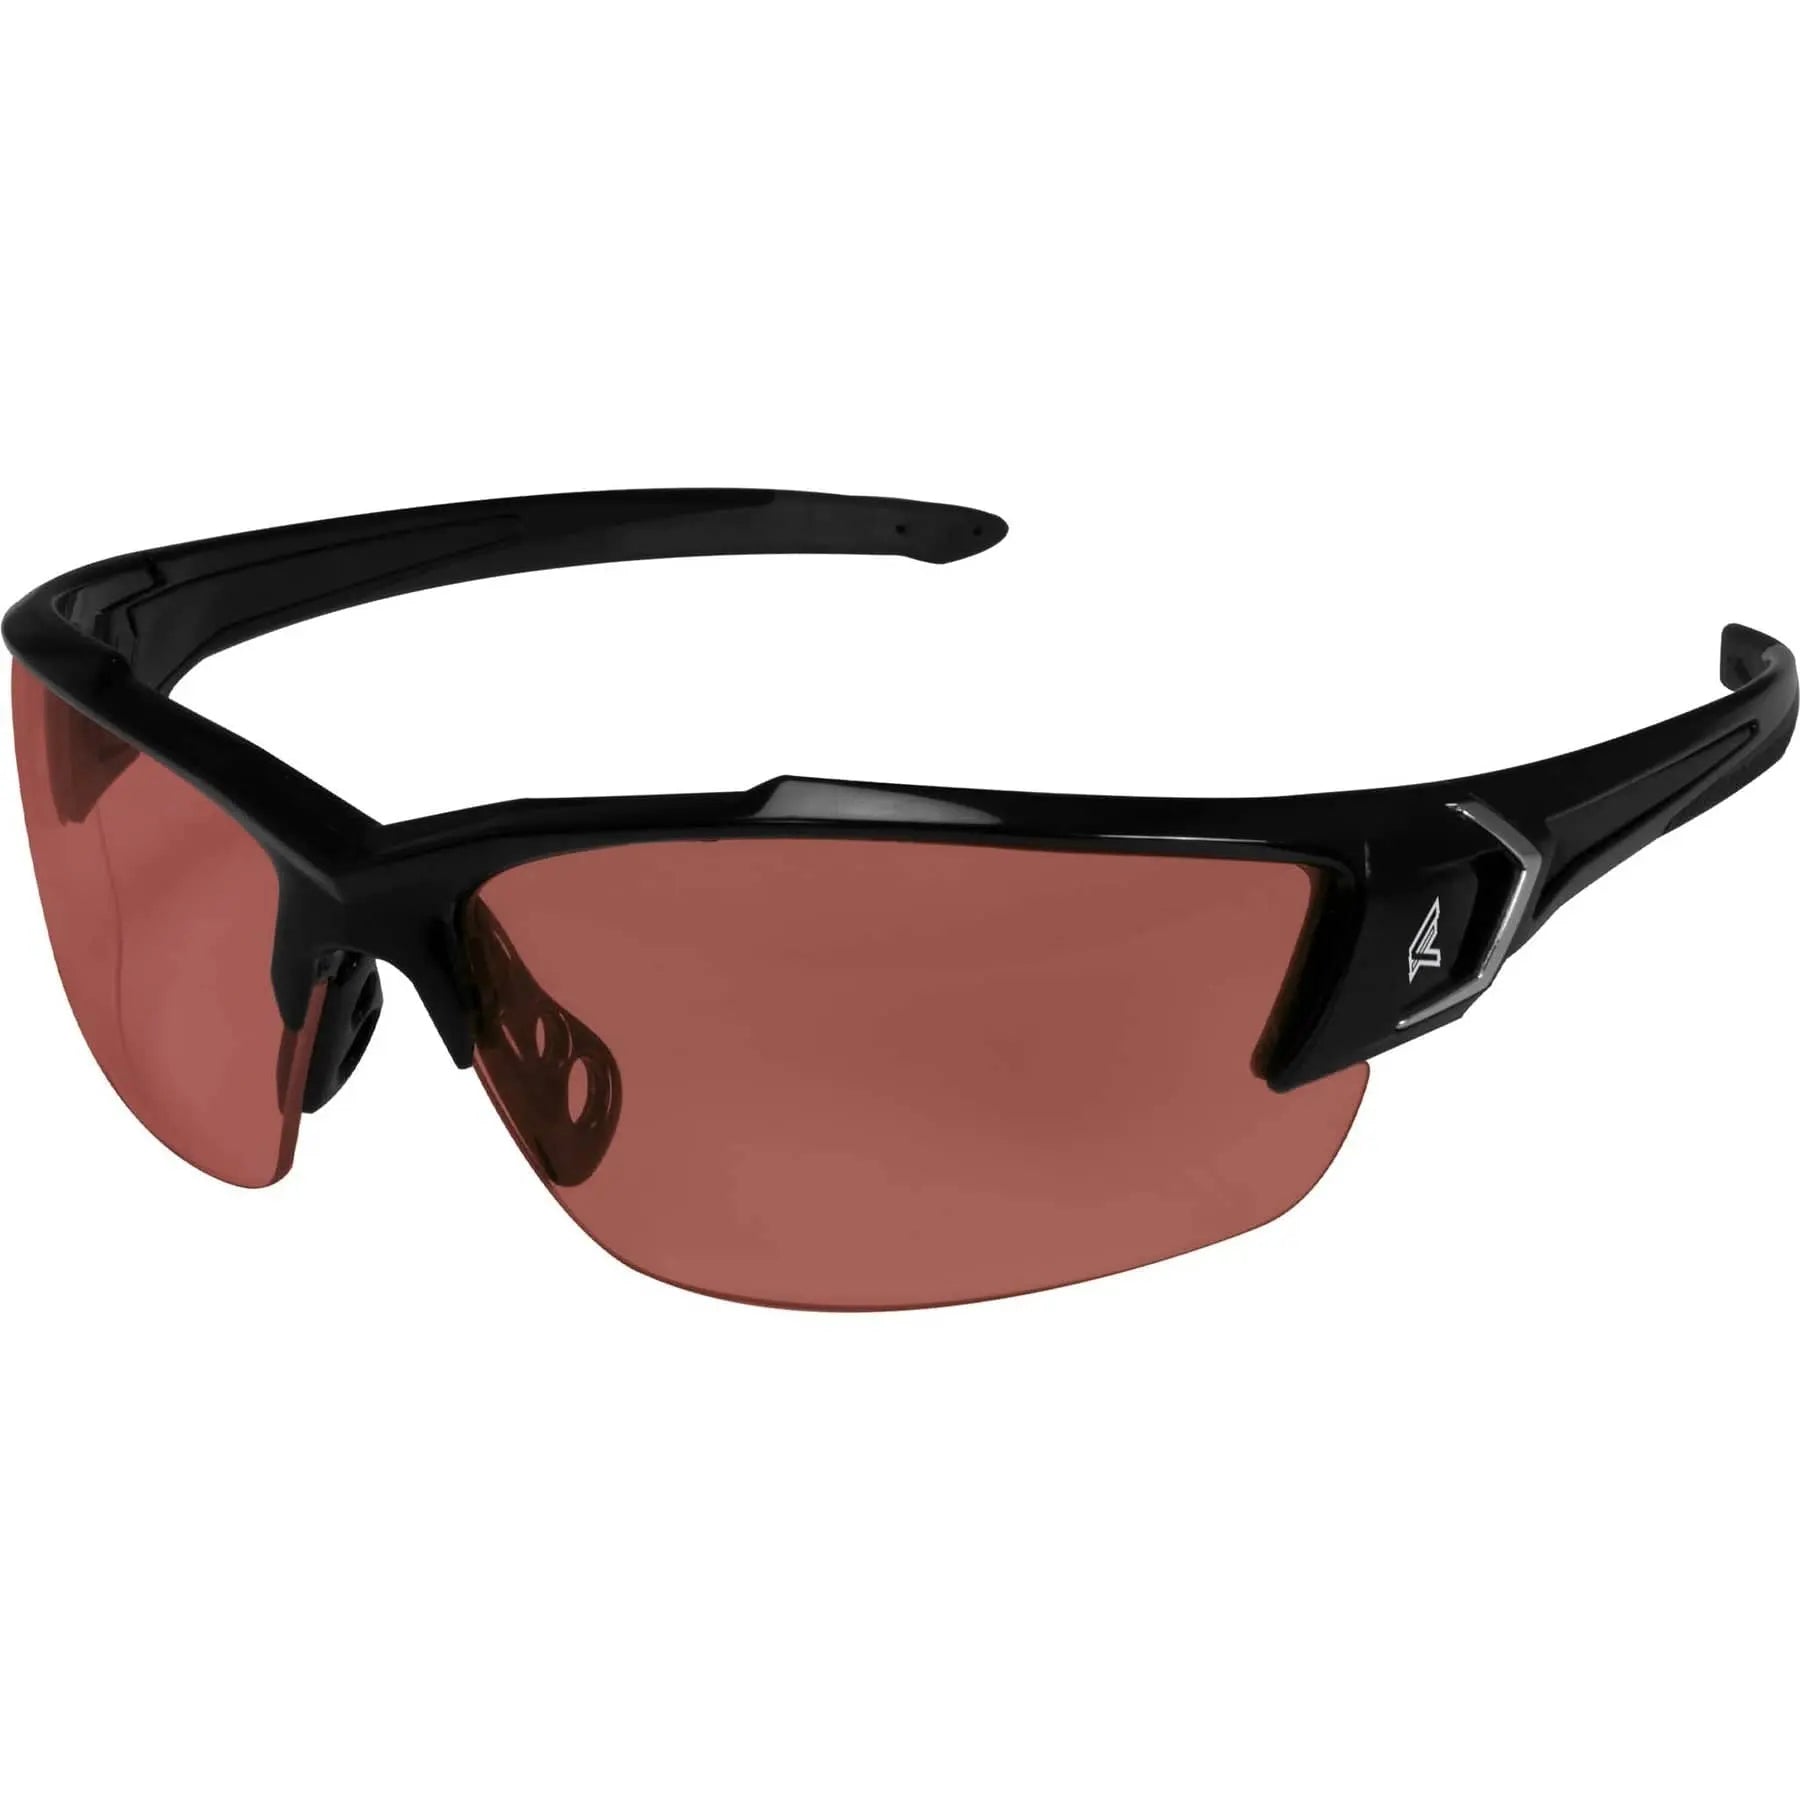 EDGE - Khor G2 Safety Glasses, Black/Copper - Becker Safety and Supply